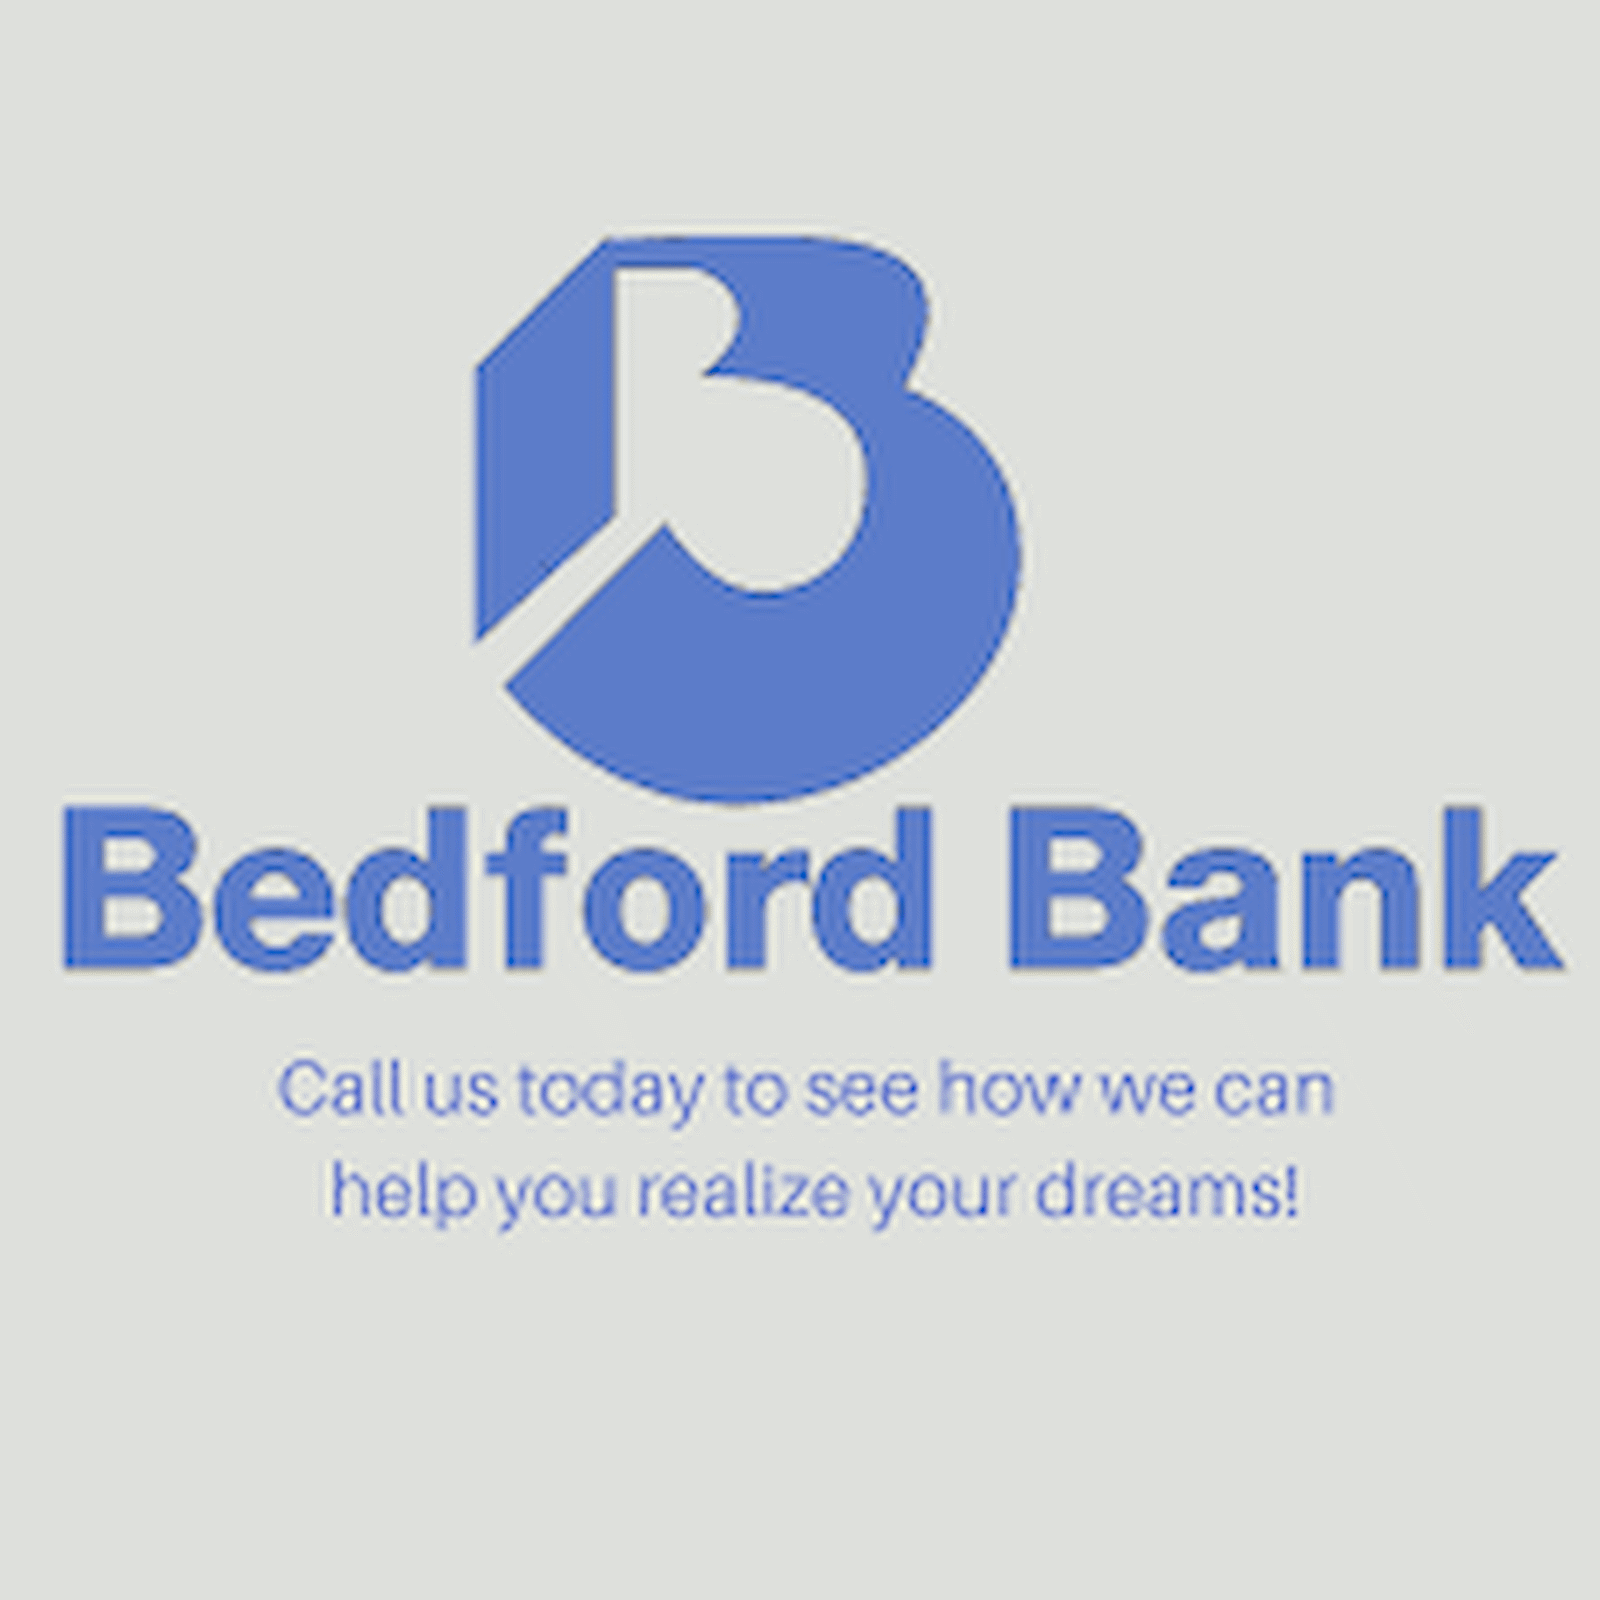 Bedford Loan & Deposit Bank